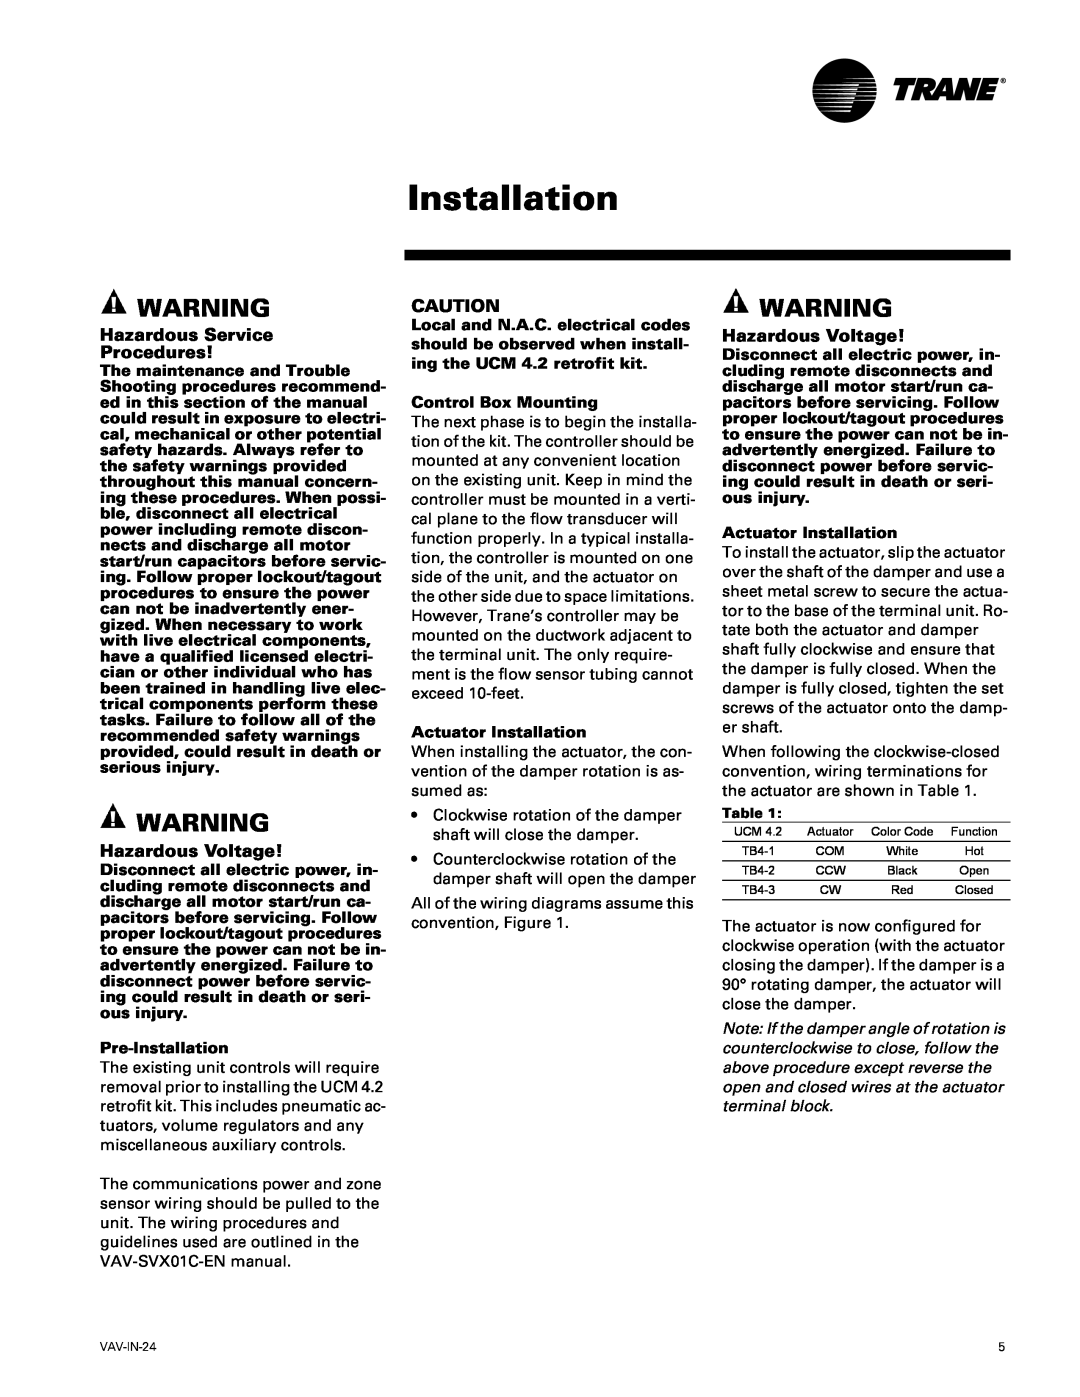 Trane Unit Control Module (UCM) 4.2 Retrofit Model VAV manual Installation, Hazardous Service Procedures, Hazardous Voltage 